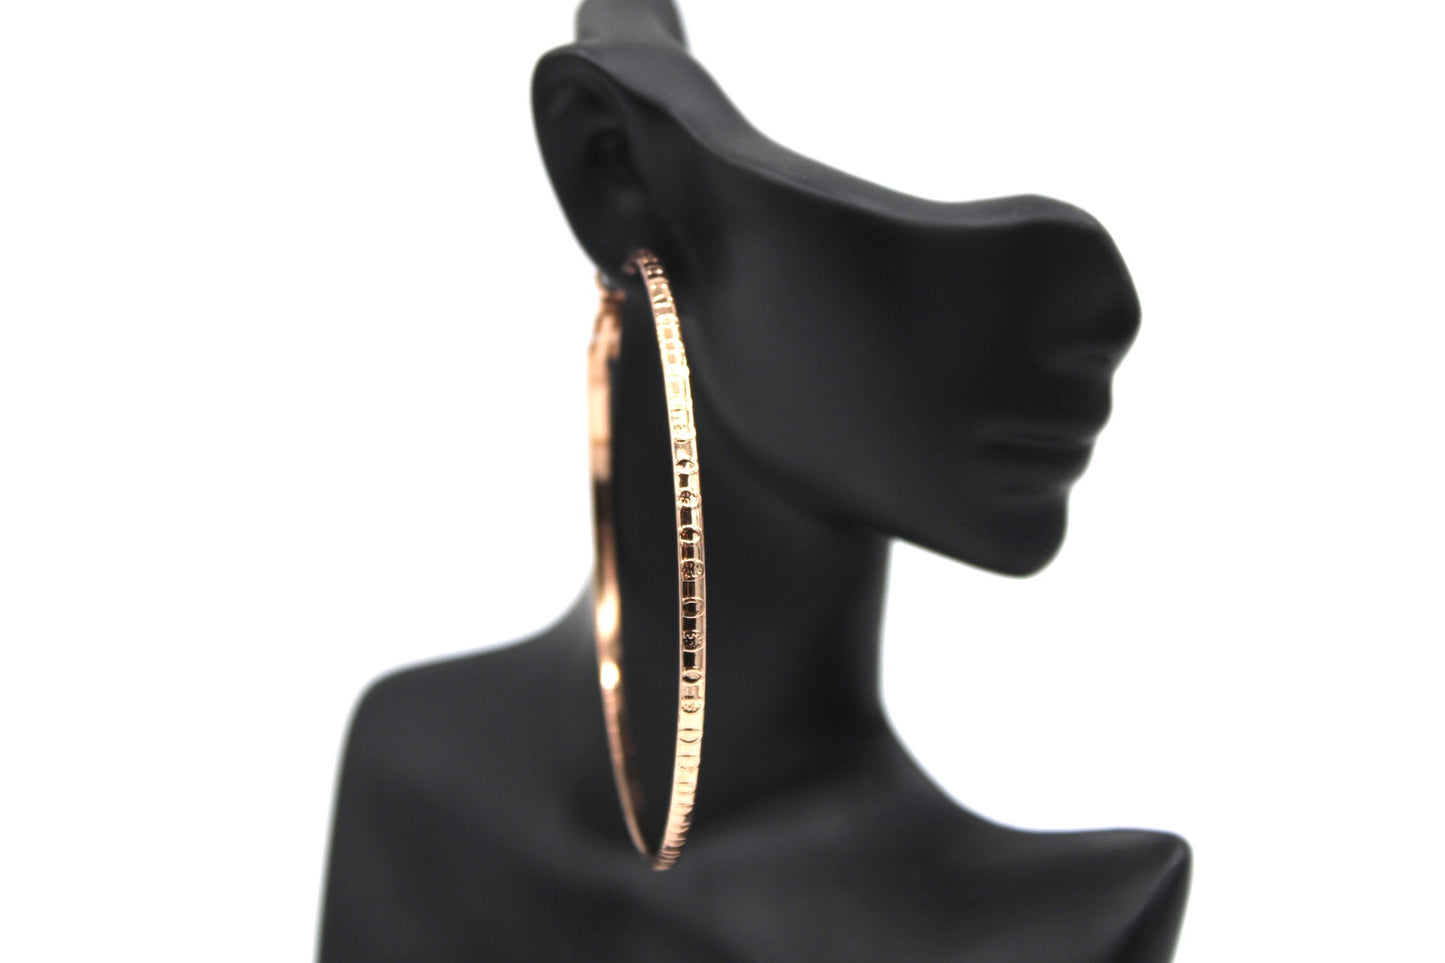 Rose gold textured hoop - Monique Fashion Accessories